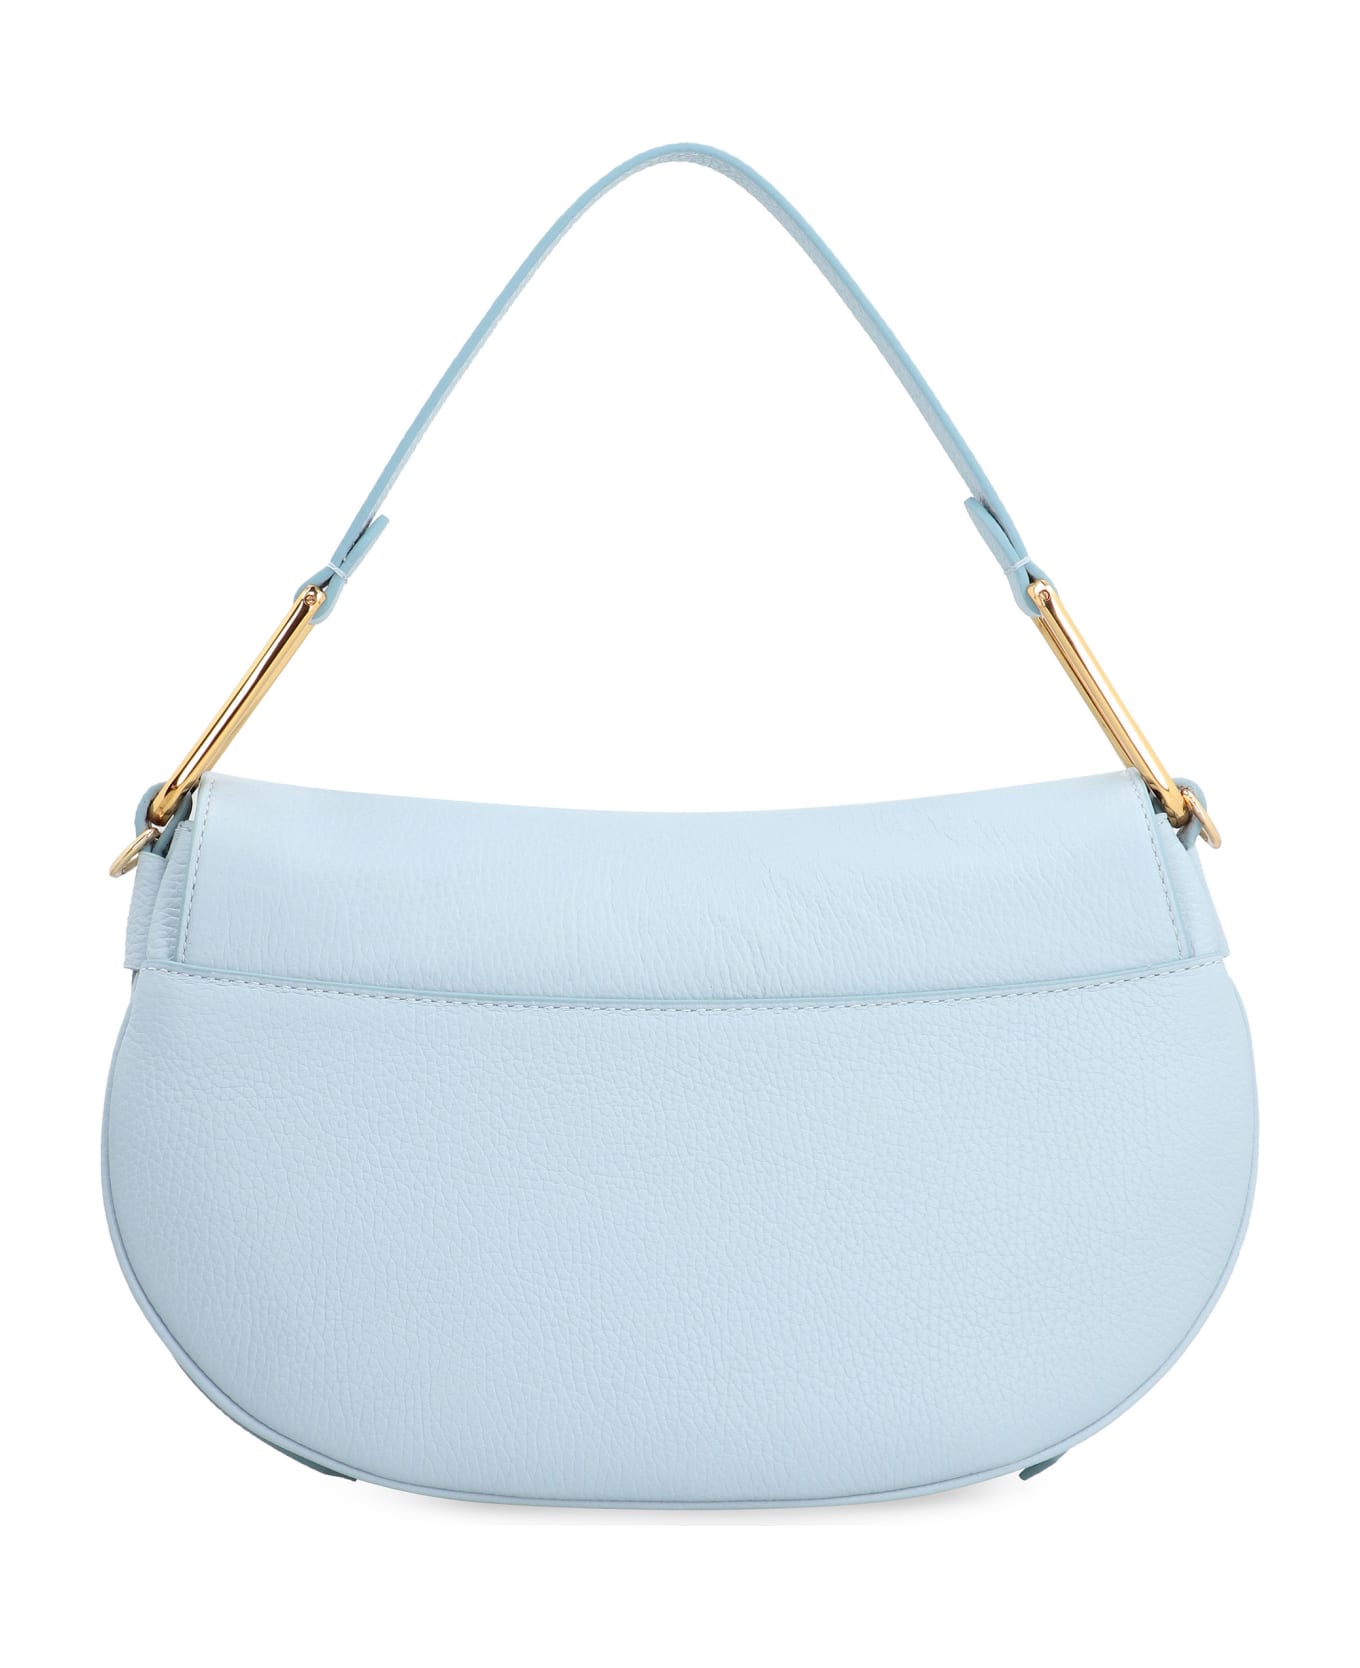 Coccinelle Magie Soft Leather Handbag - Light Blue